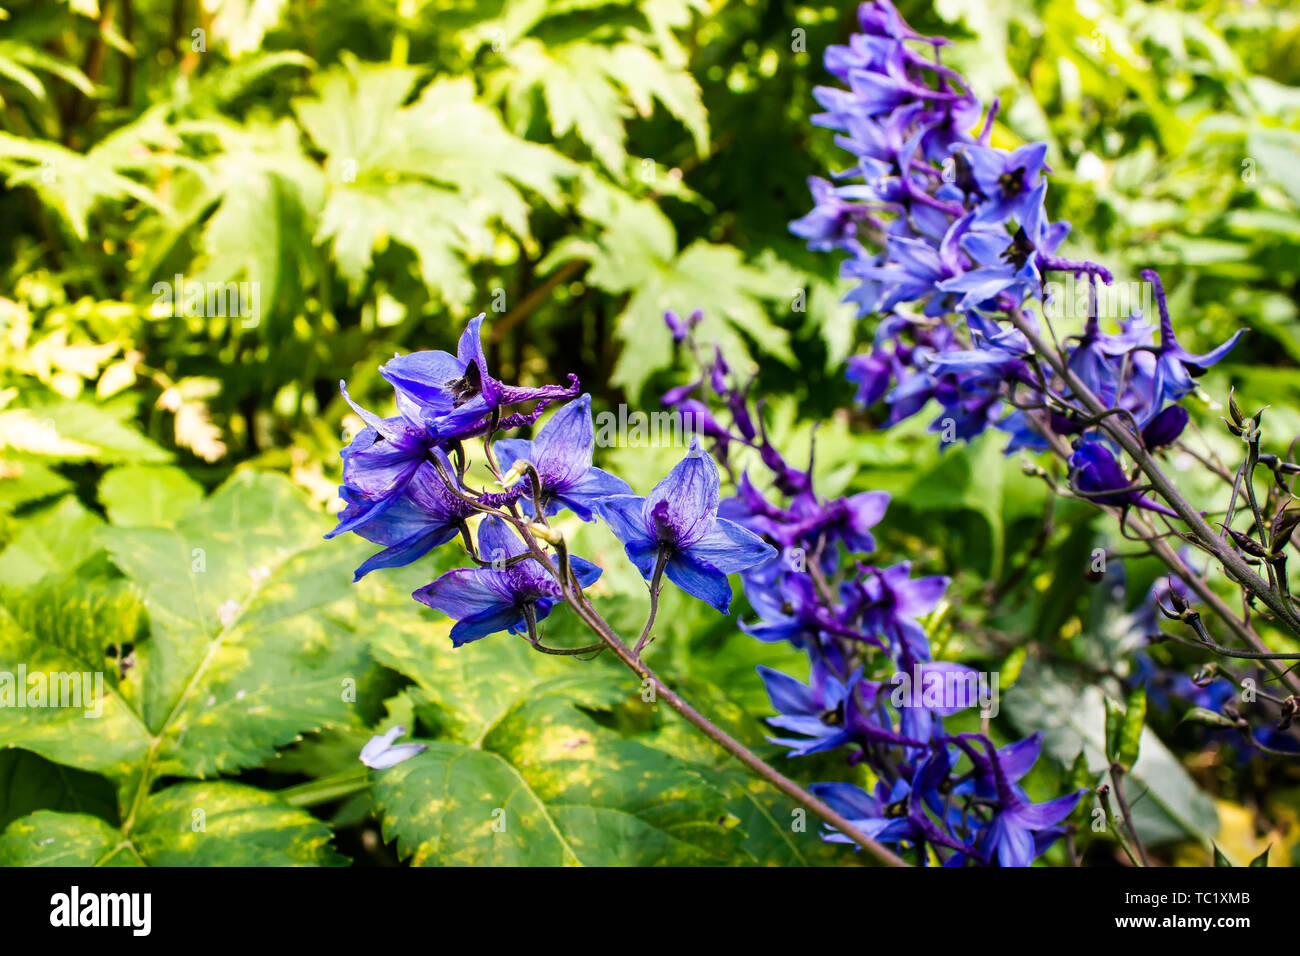 Purple bell flowers in green grass Stock Photo